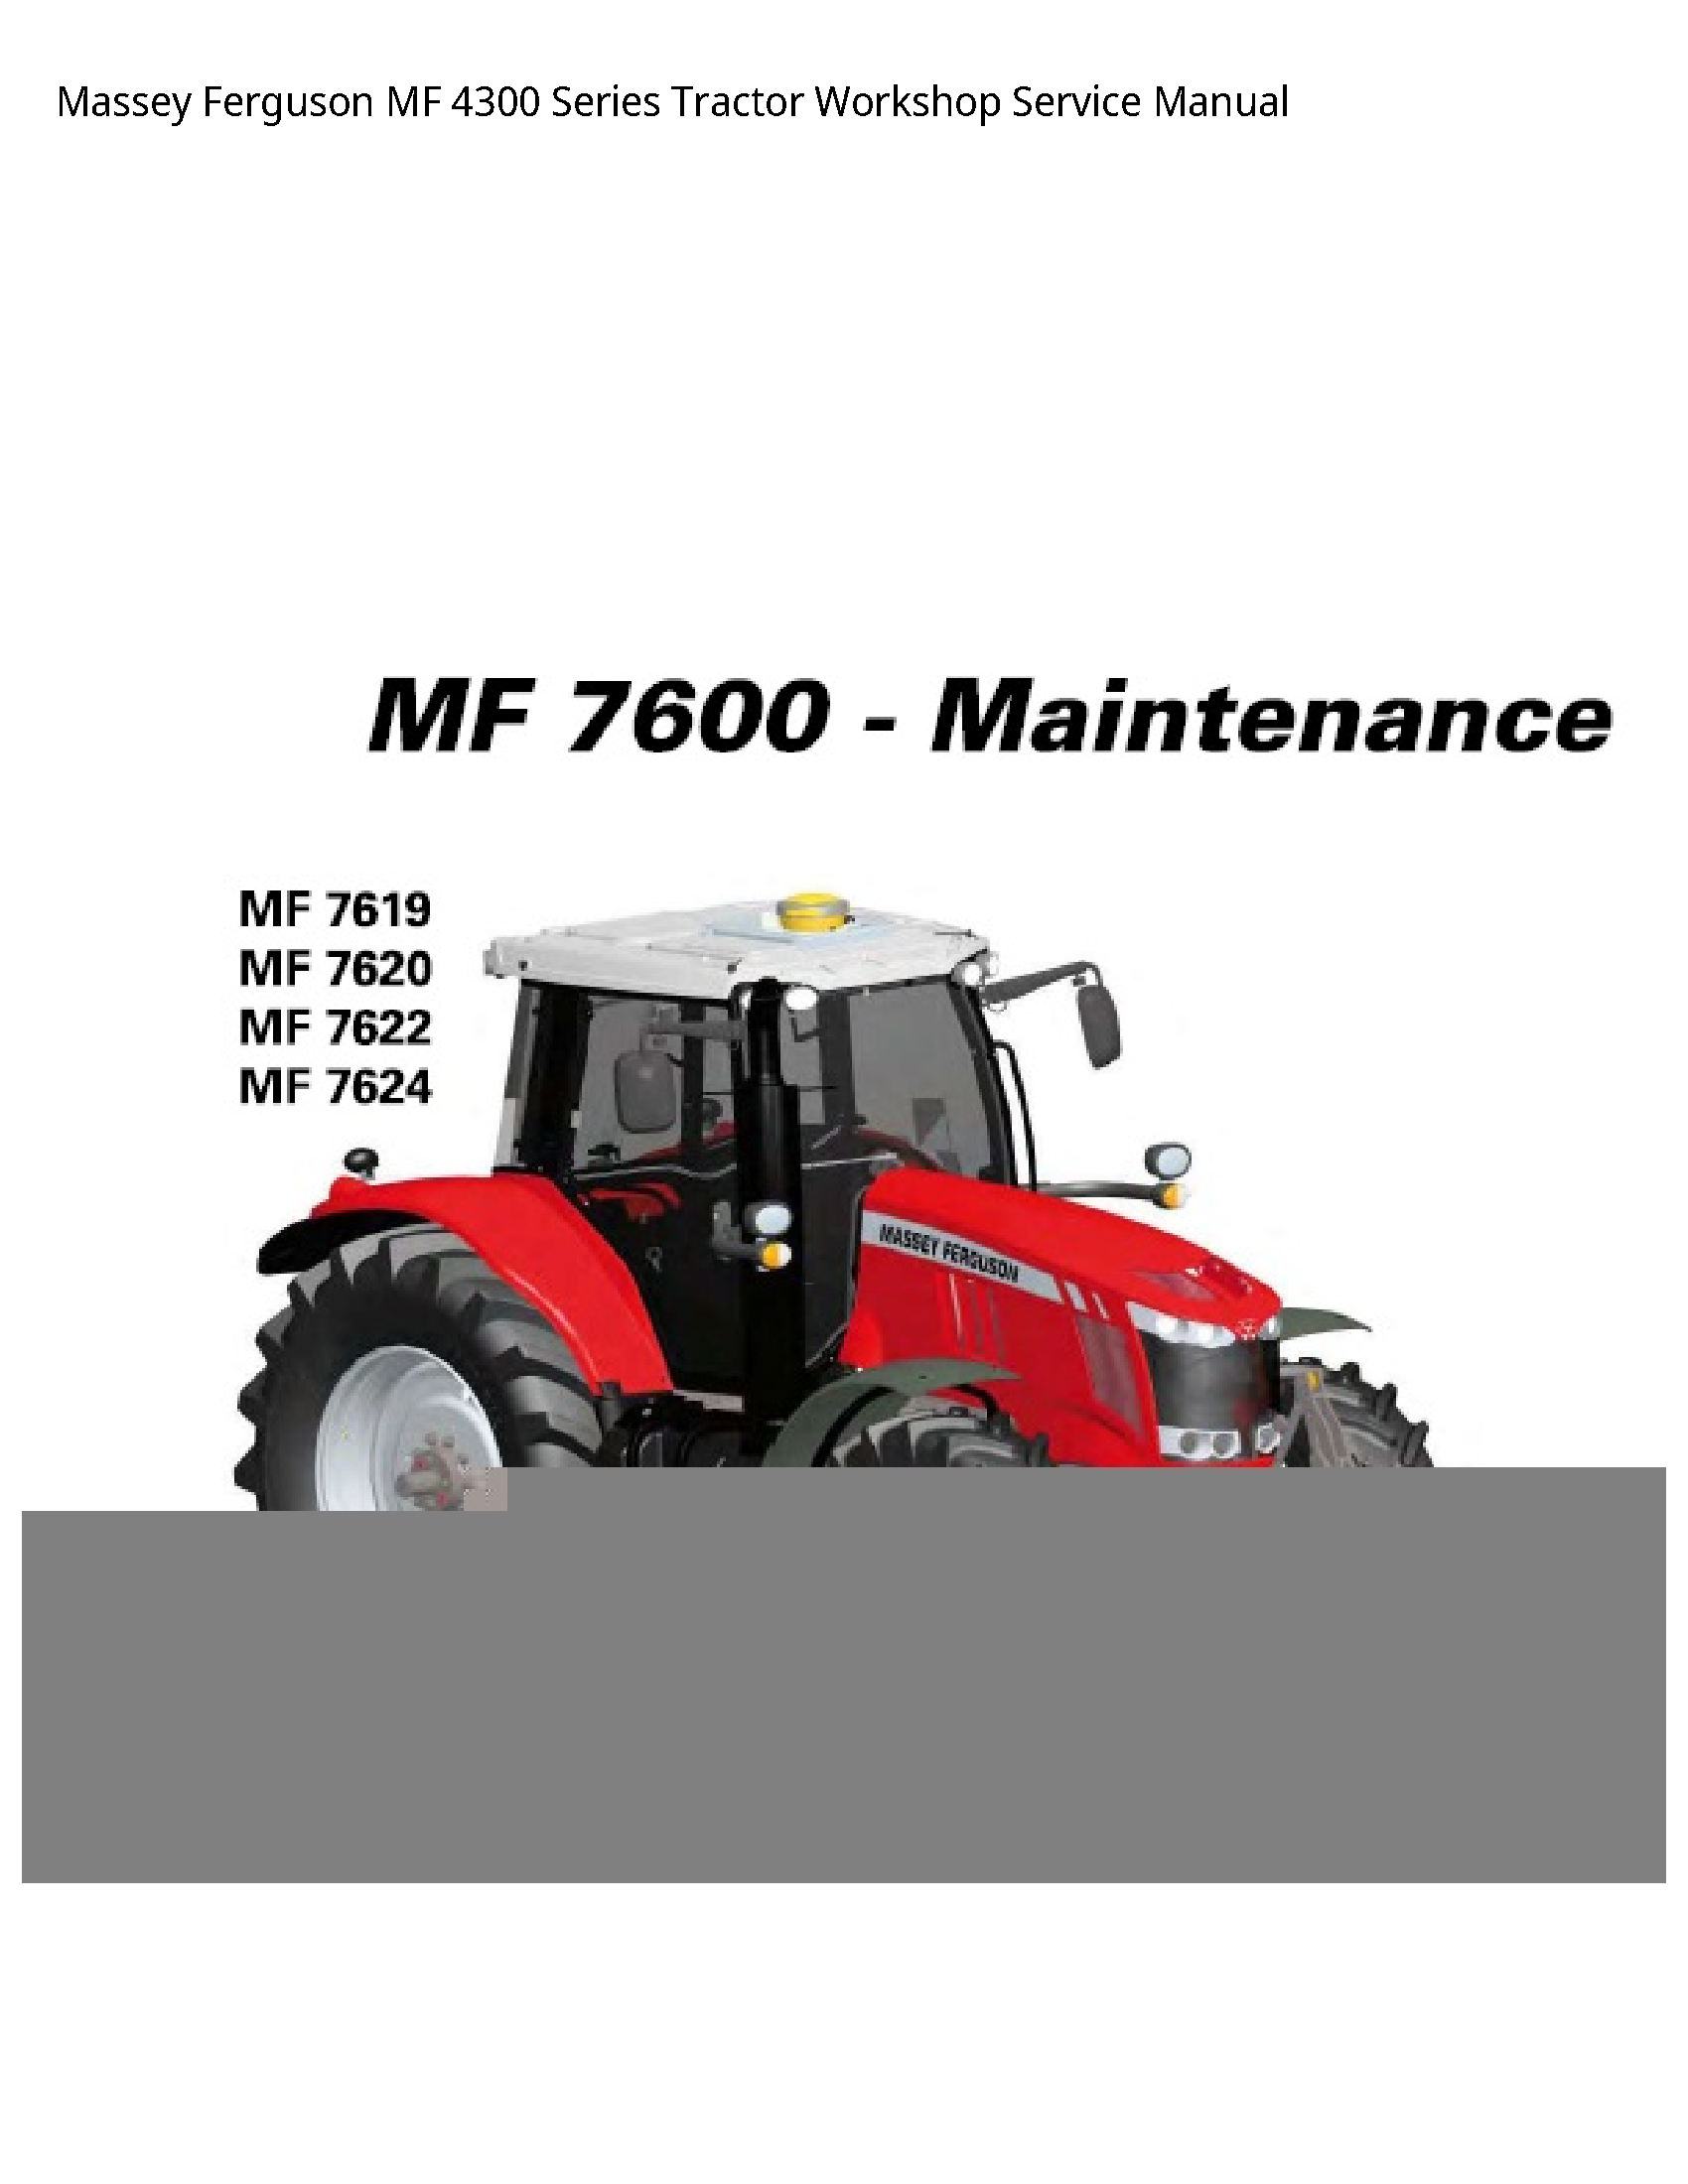 Massey Ferguson 4300 MF Series Tractor Service manual